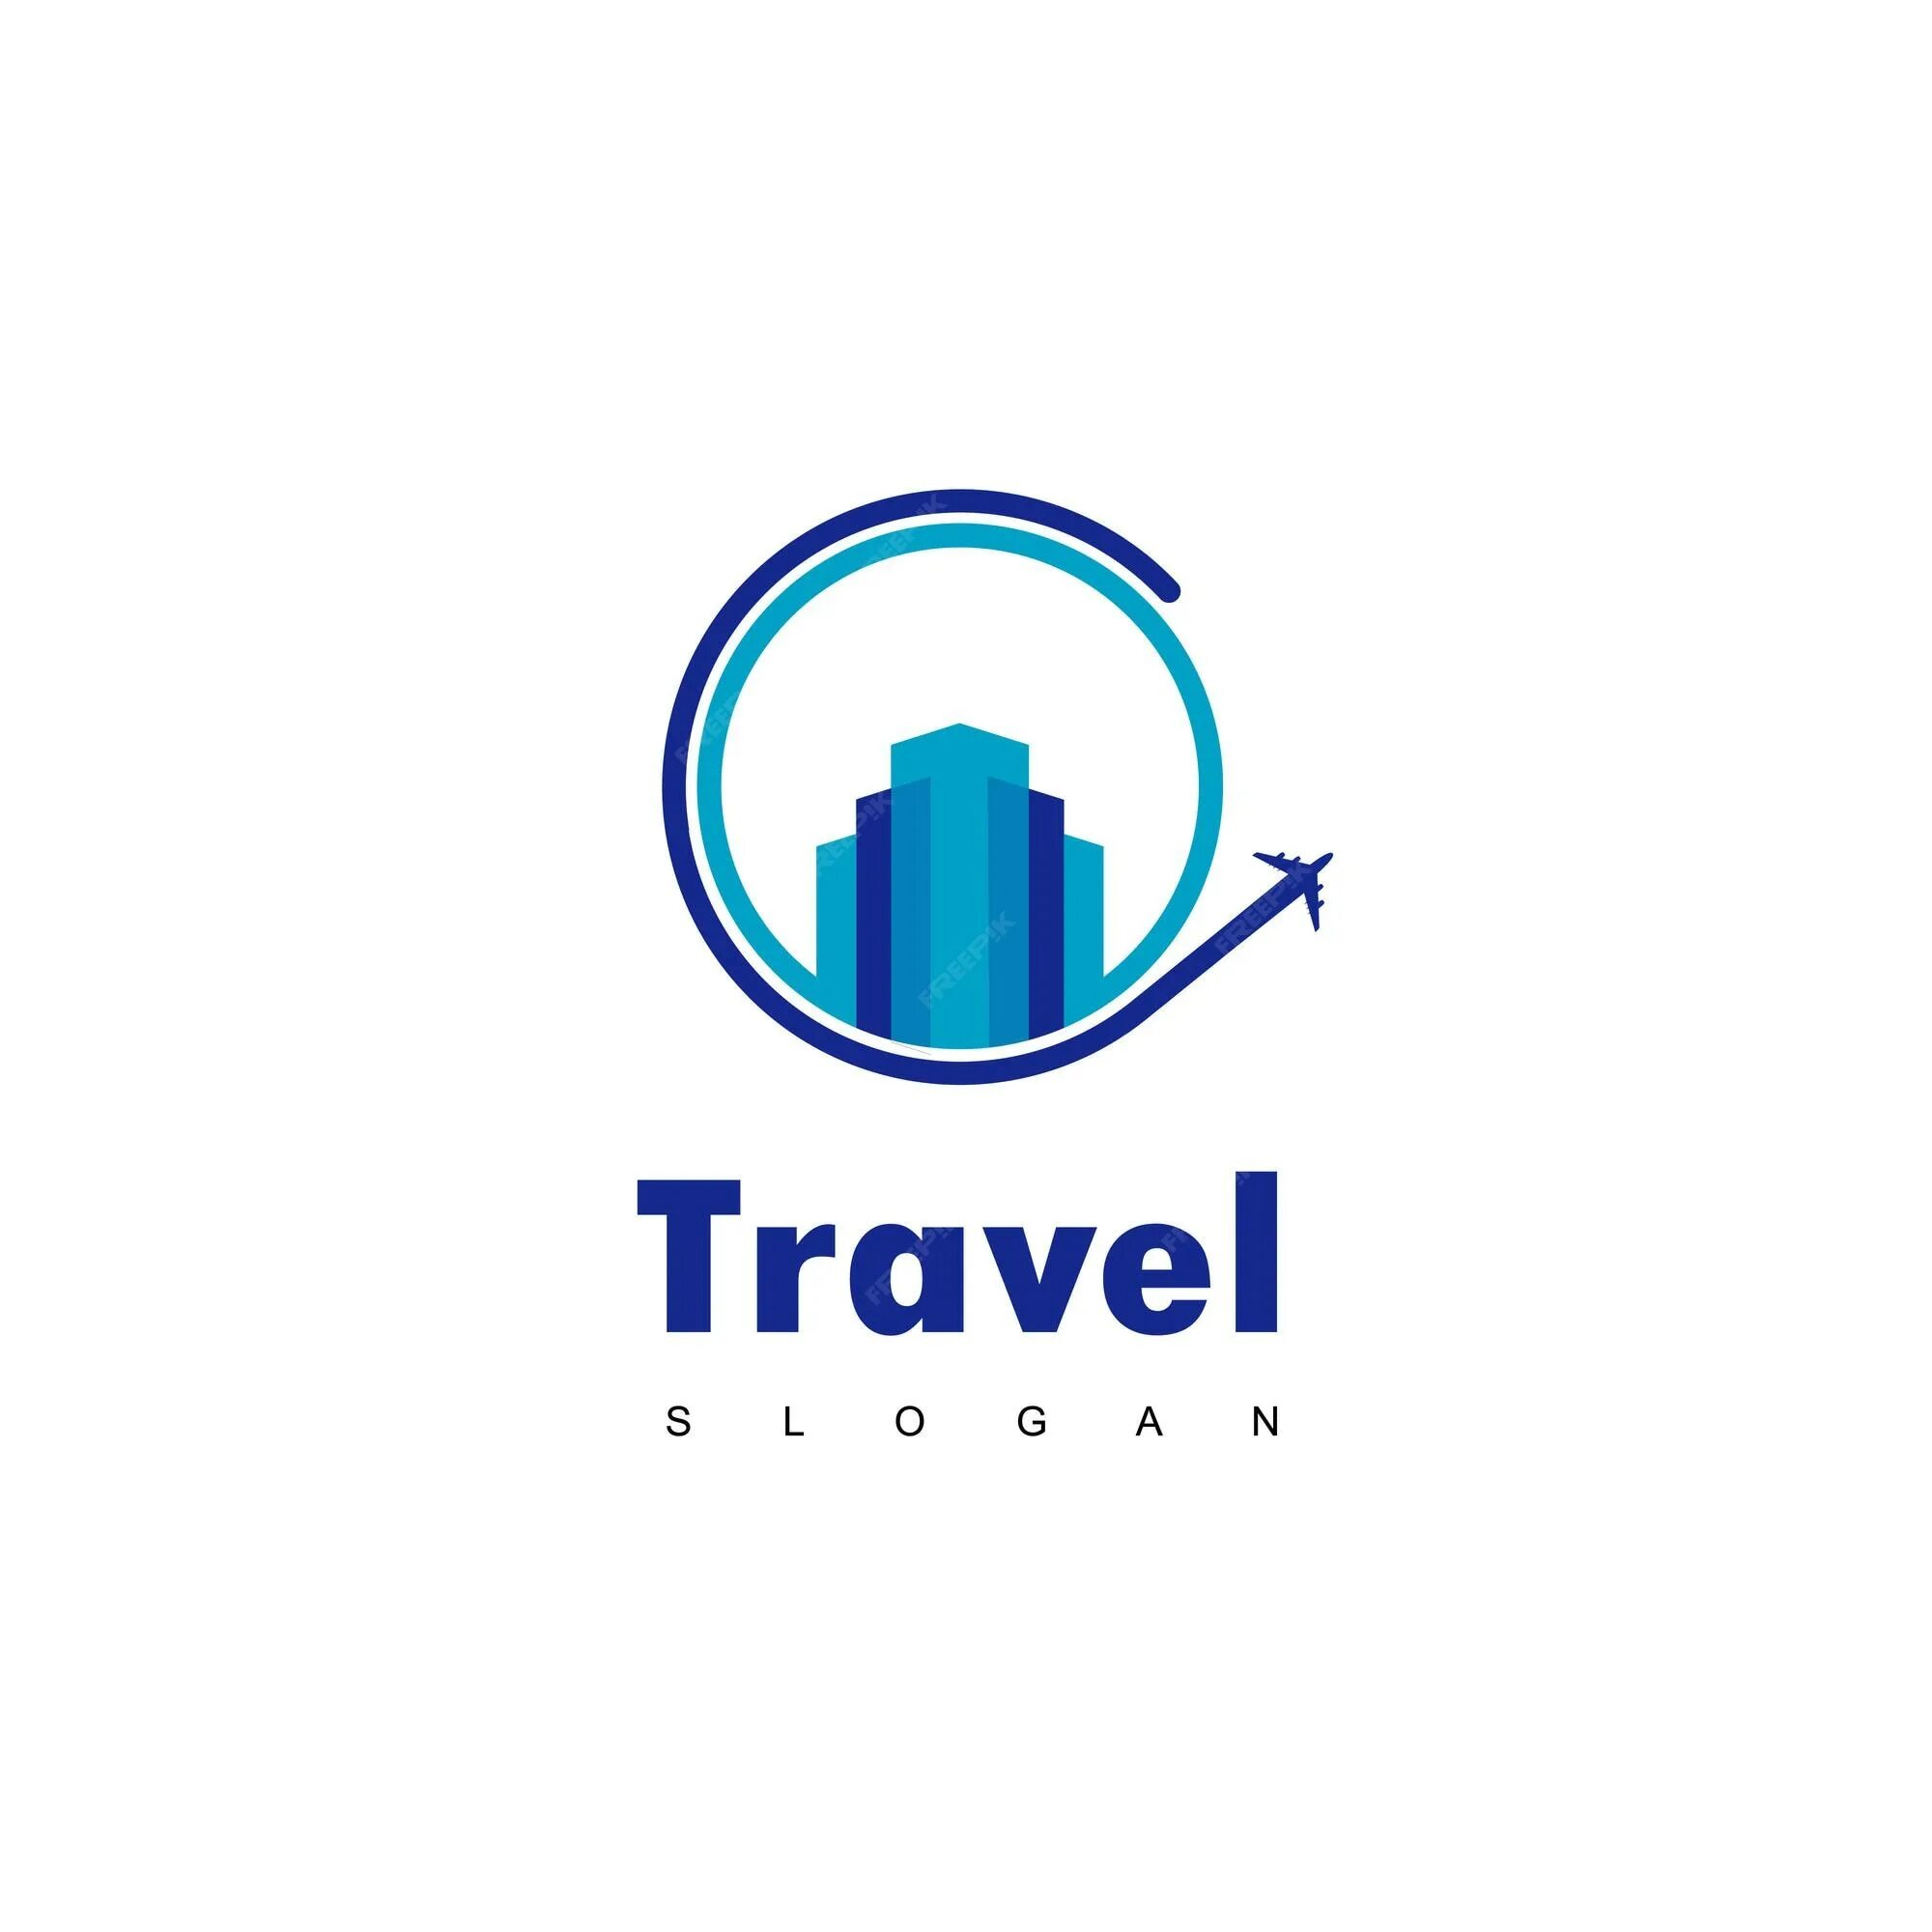 Сити тревел купить. Сити Тревел. City Travel logo. Трансформатор Тревел логотипы.